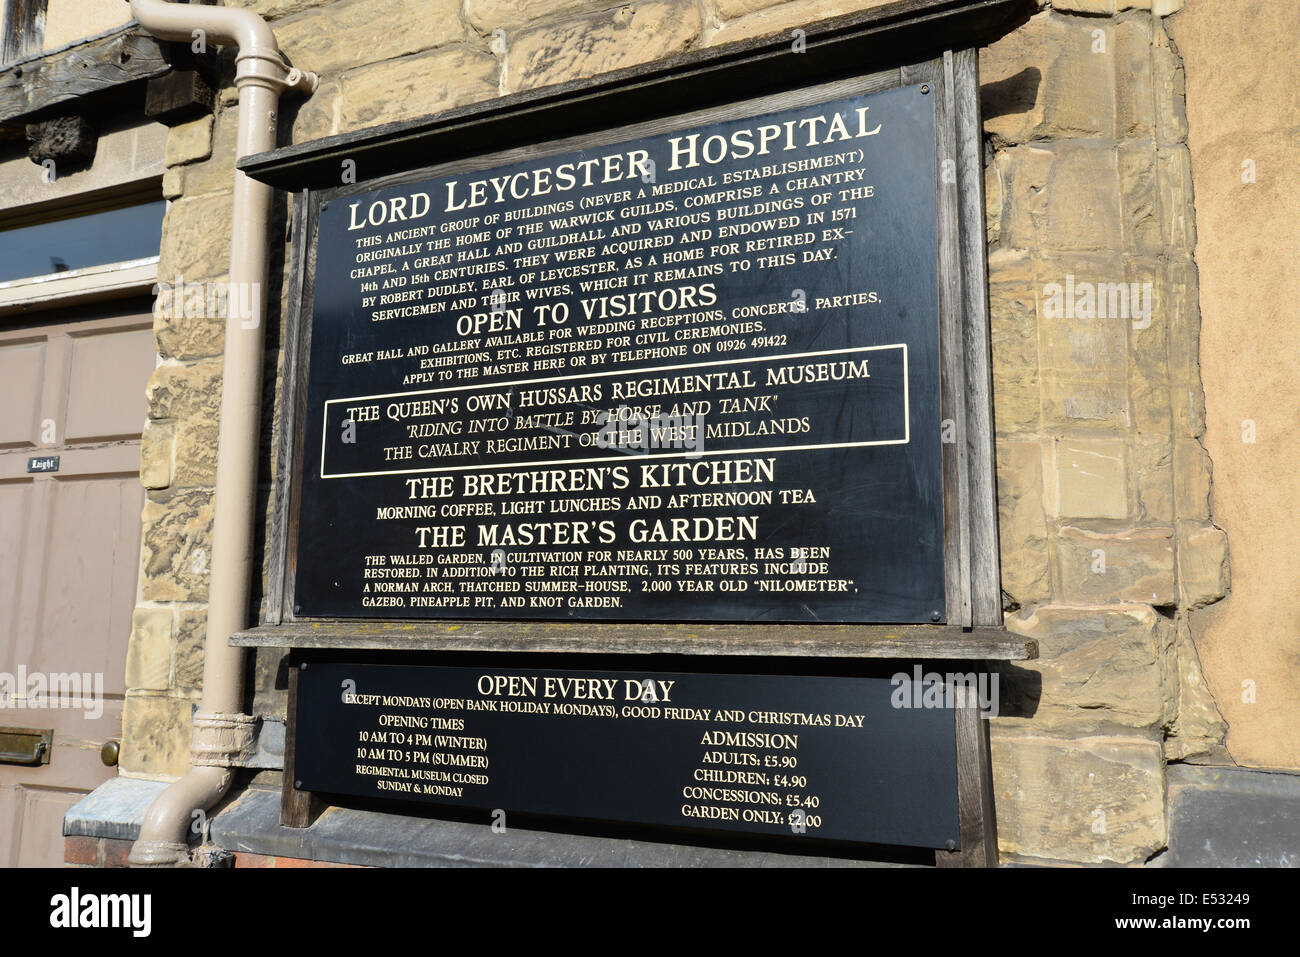 Visitor information sign at entrance to Lord Leycester Hospital, High Street, Warwick, Warwickshire, England, United Kingdom Stock Photo